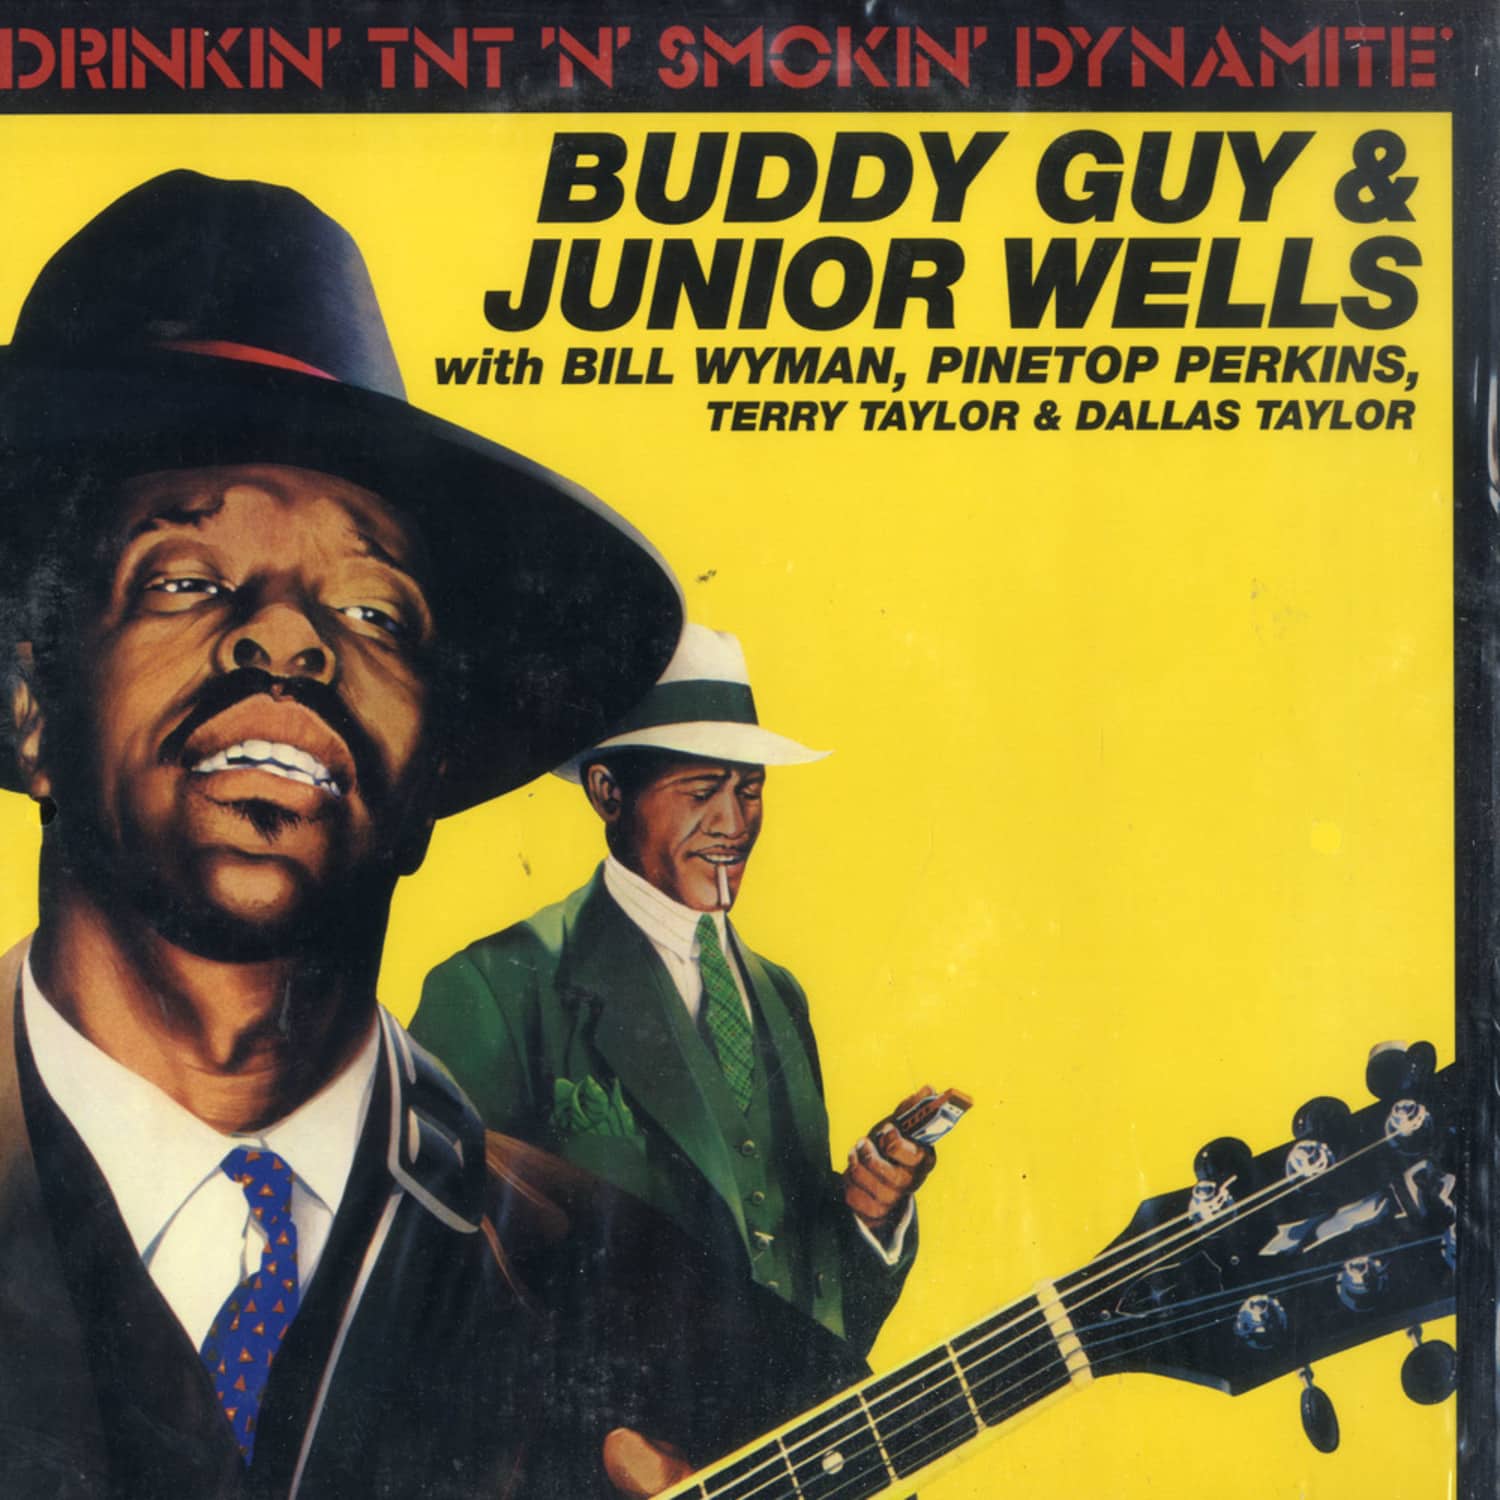 Buddy Guy & Junior Wells - DRINKIN TNT N SMOKIN DYNAMITE 